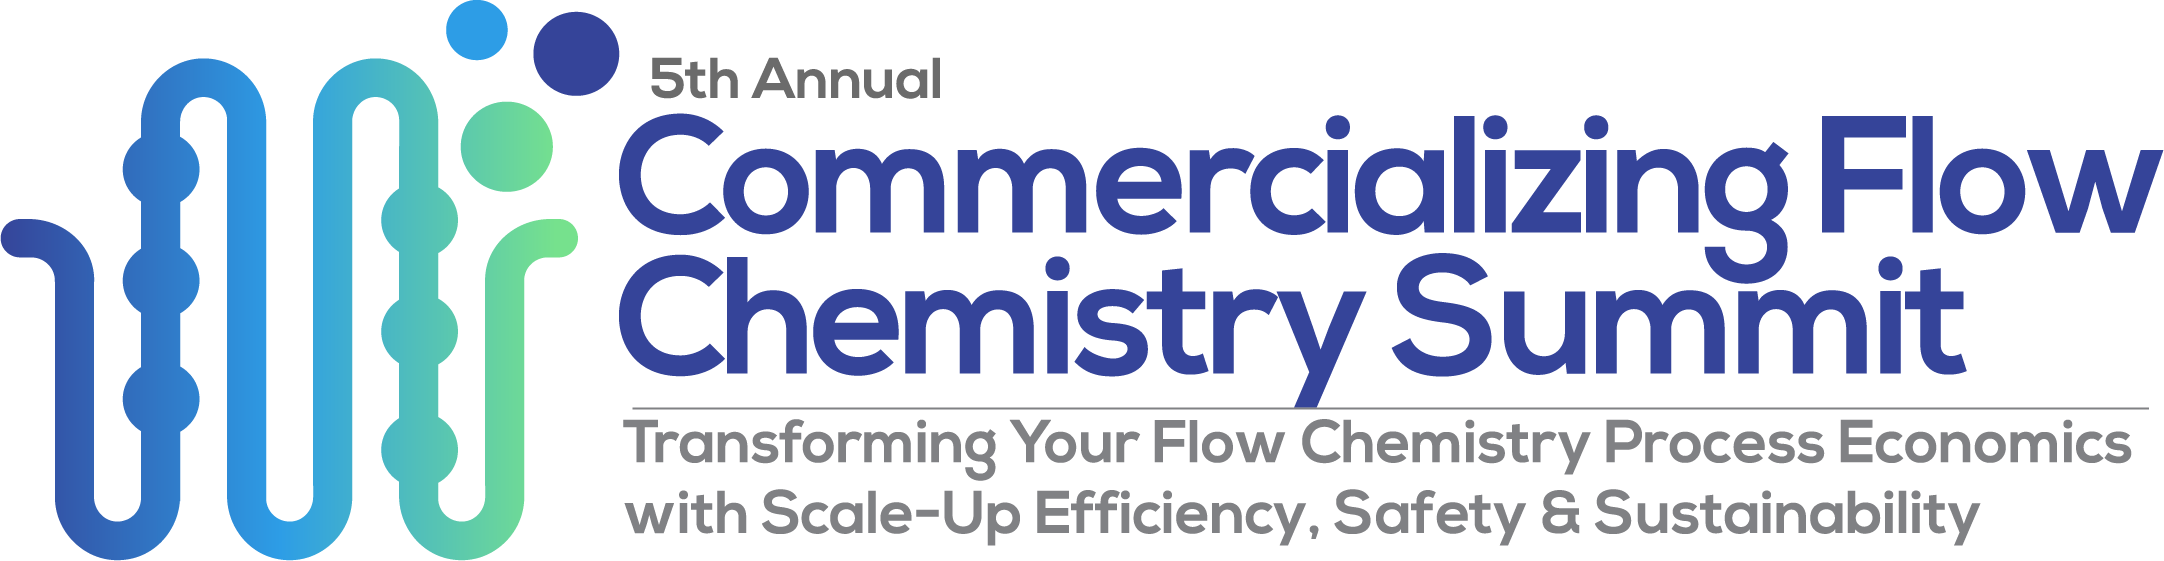 HW240517 48283 5th Commercialising Flow Chemistry Summit logo STRAP